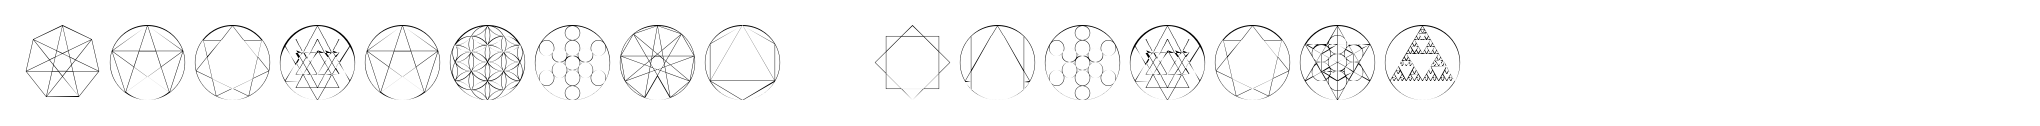 Geometric Harmony image